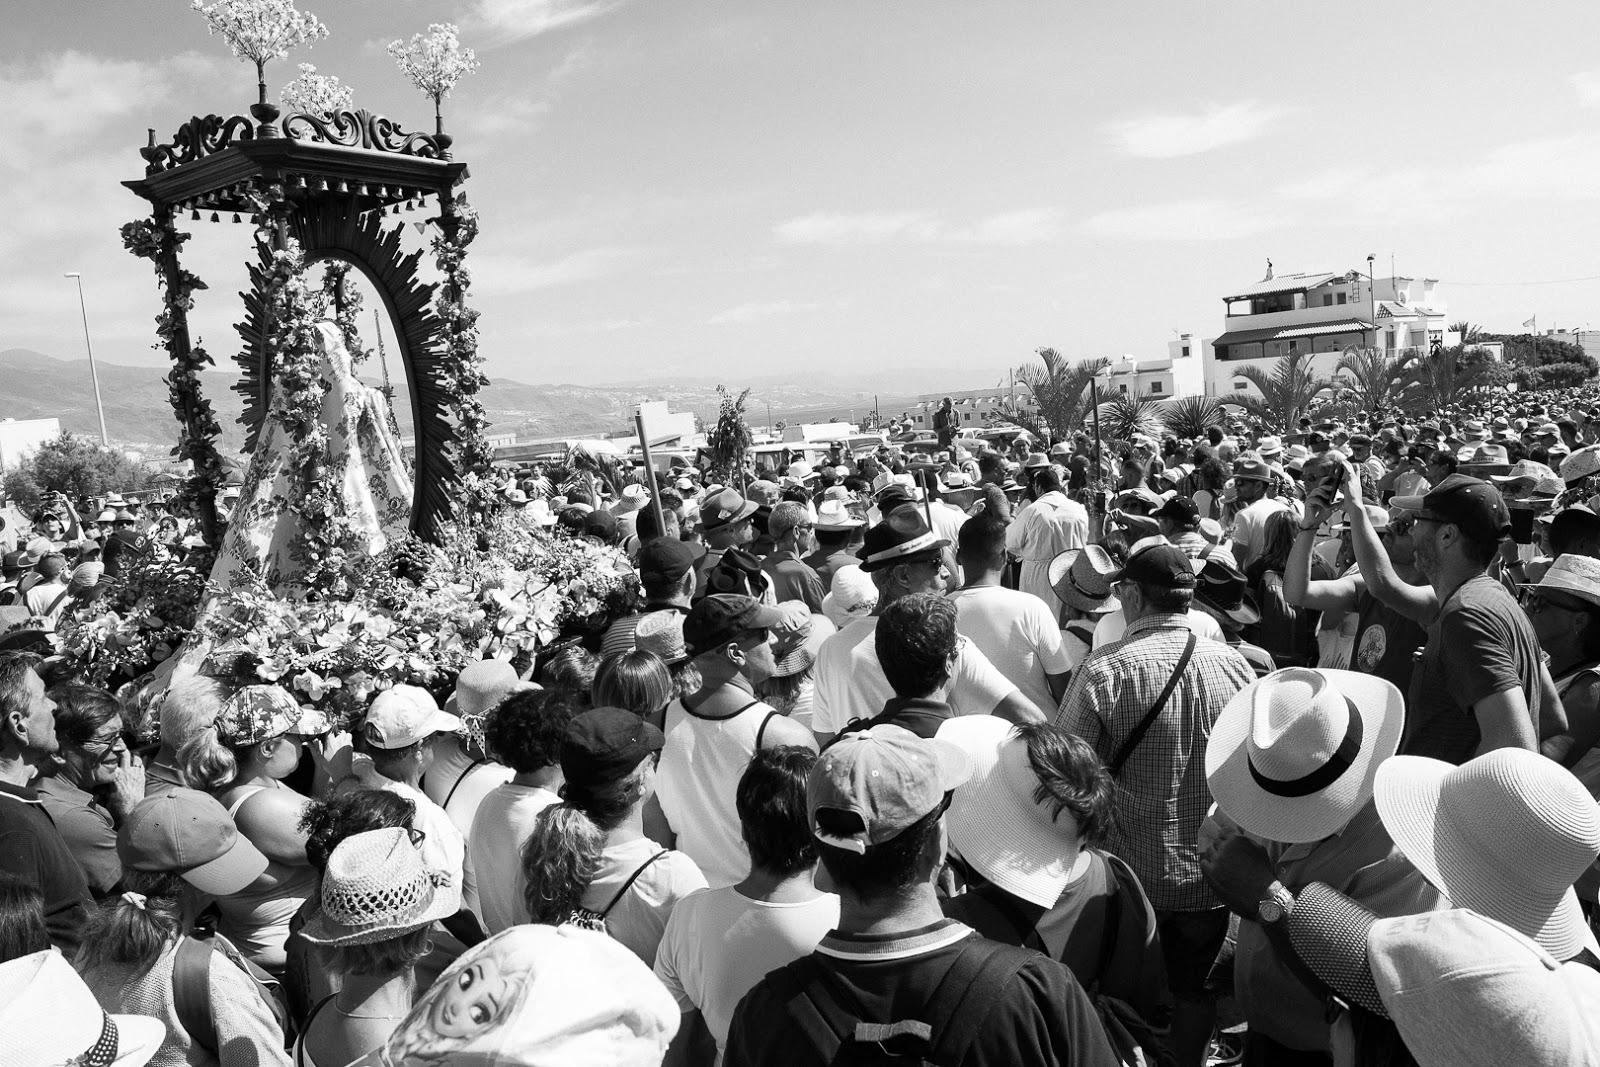 Romeria, Guimar - Socorro; Masses carrying La Virgen